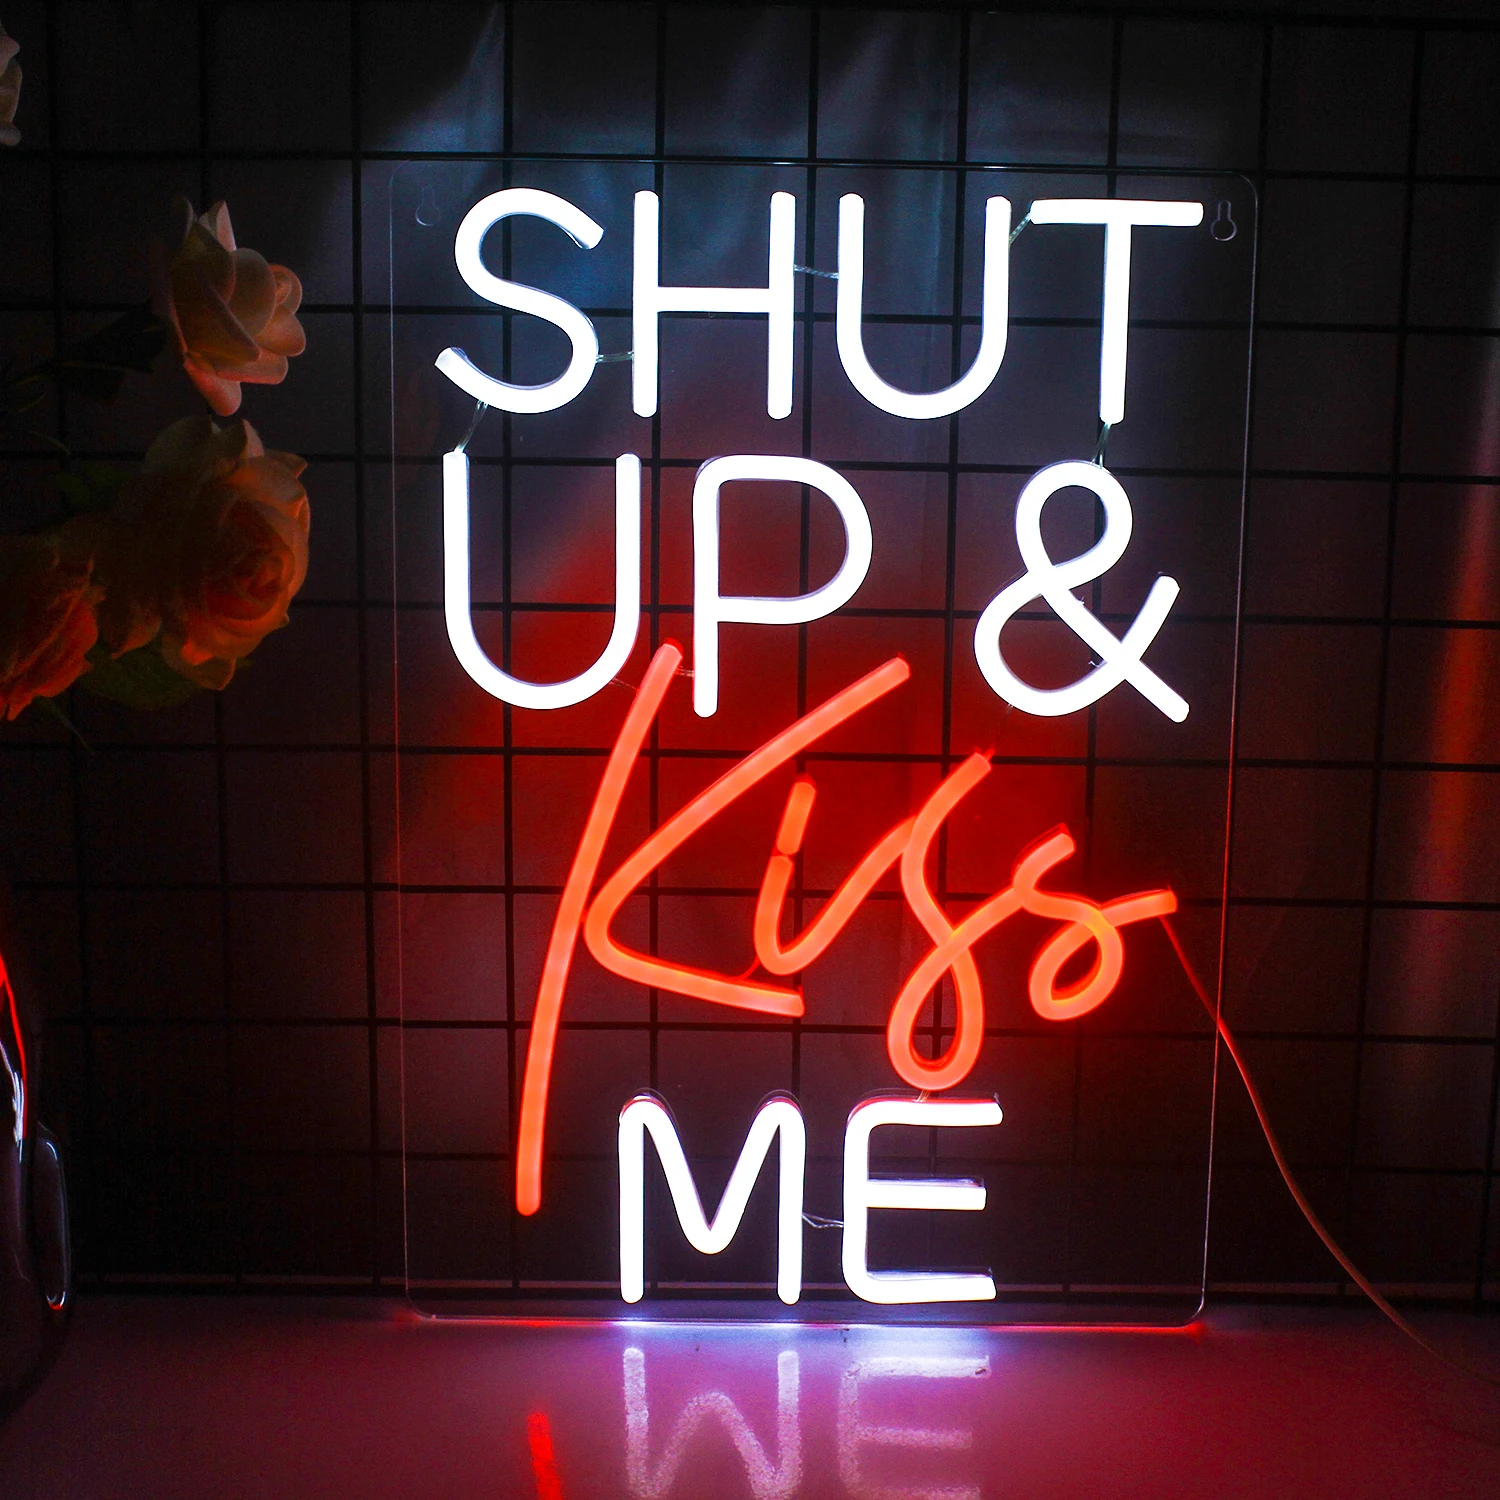 

Shut Up Kiss Me Neon Led Sign Lights Art Letter Logo Bedroom Decoration USB Powered Wall Lamp For Home Bars Party Festival Item